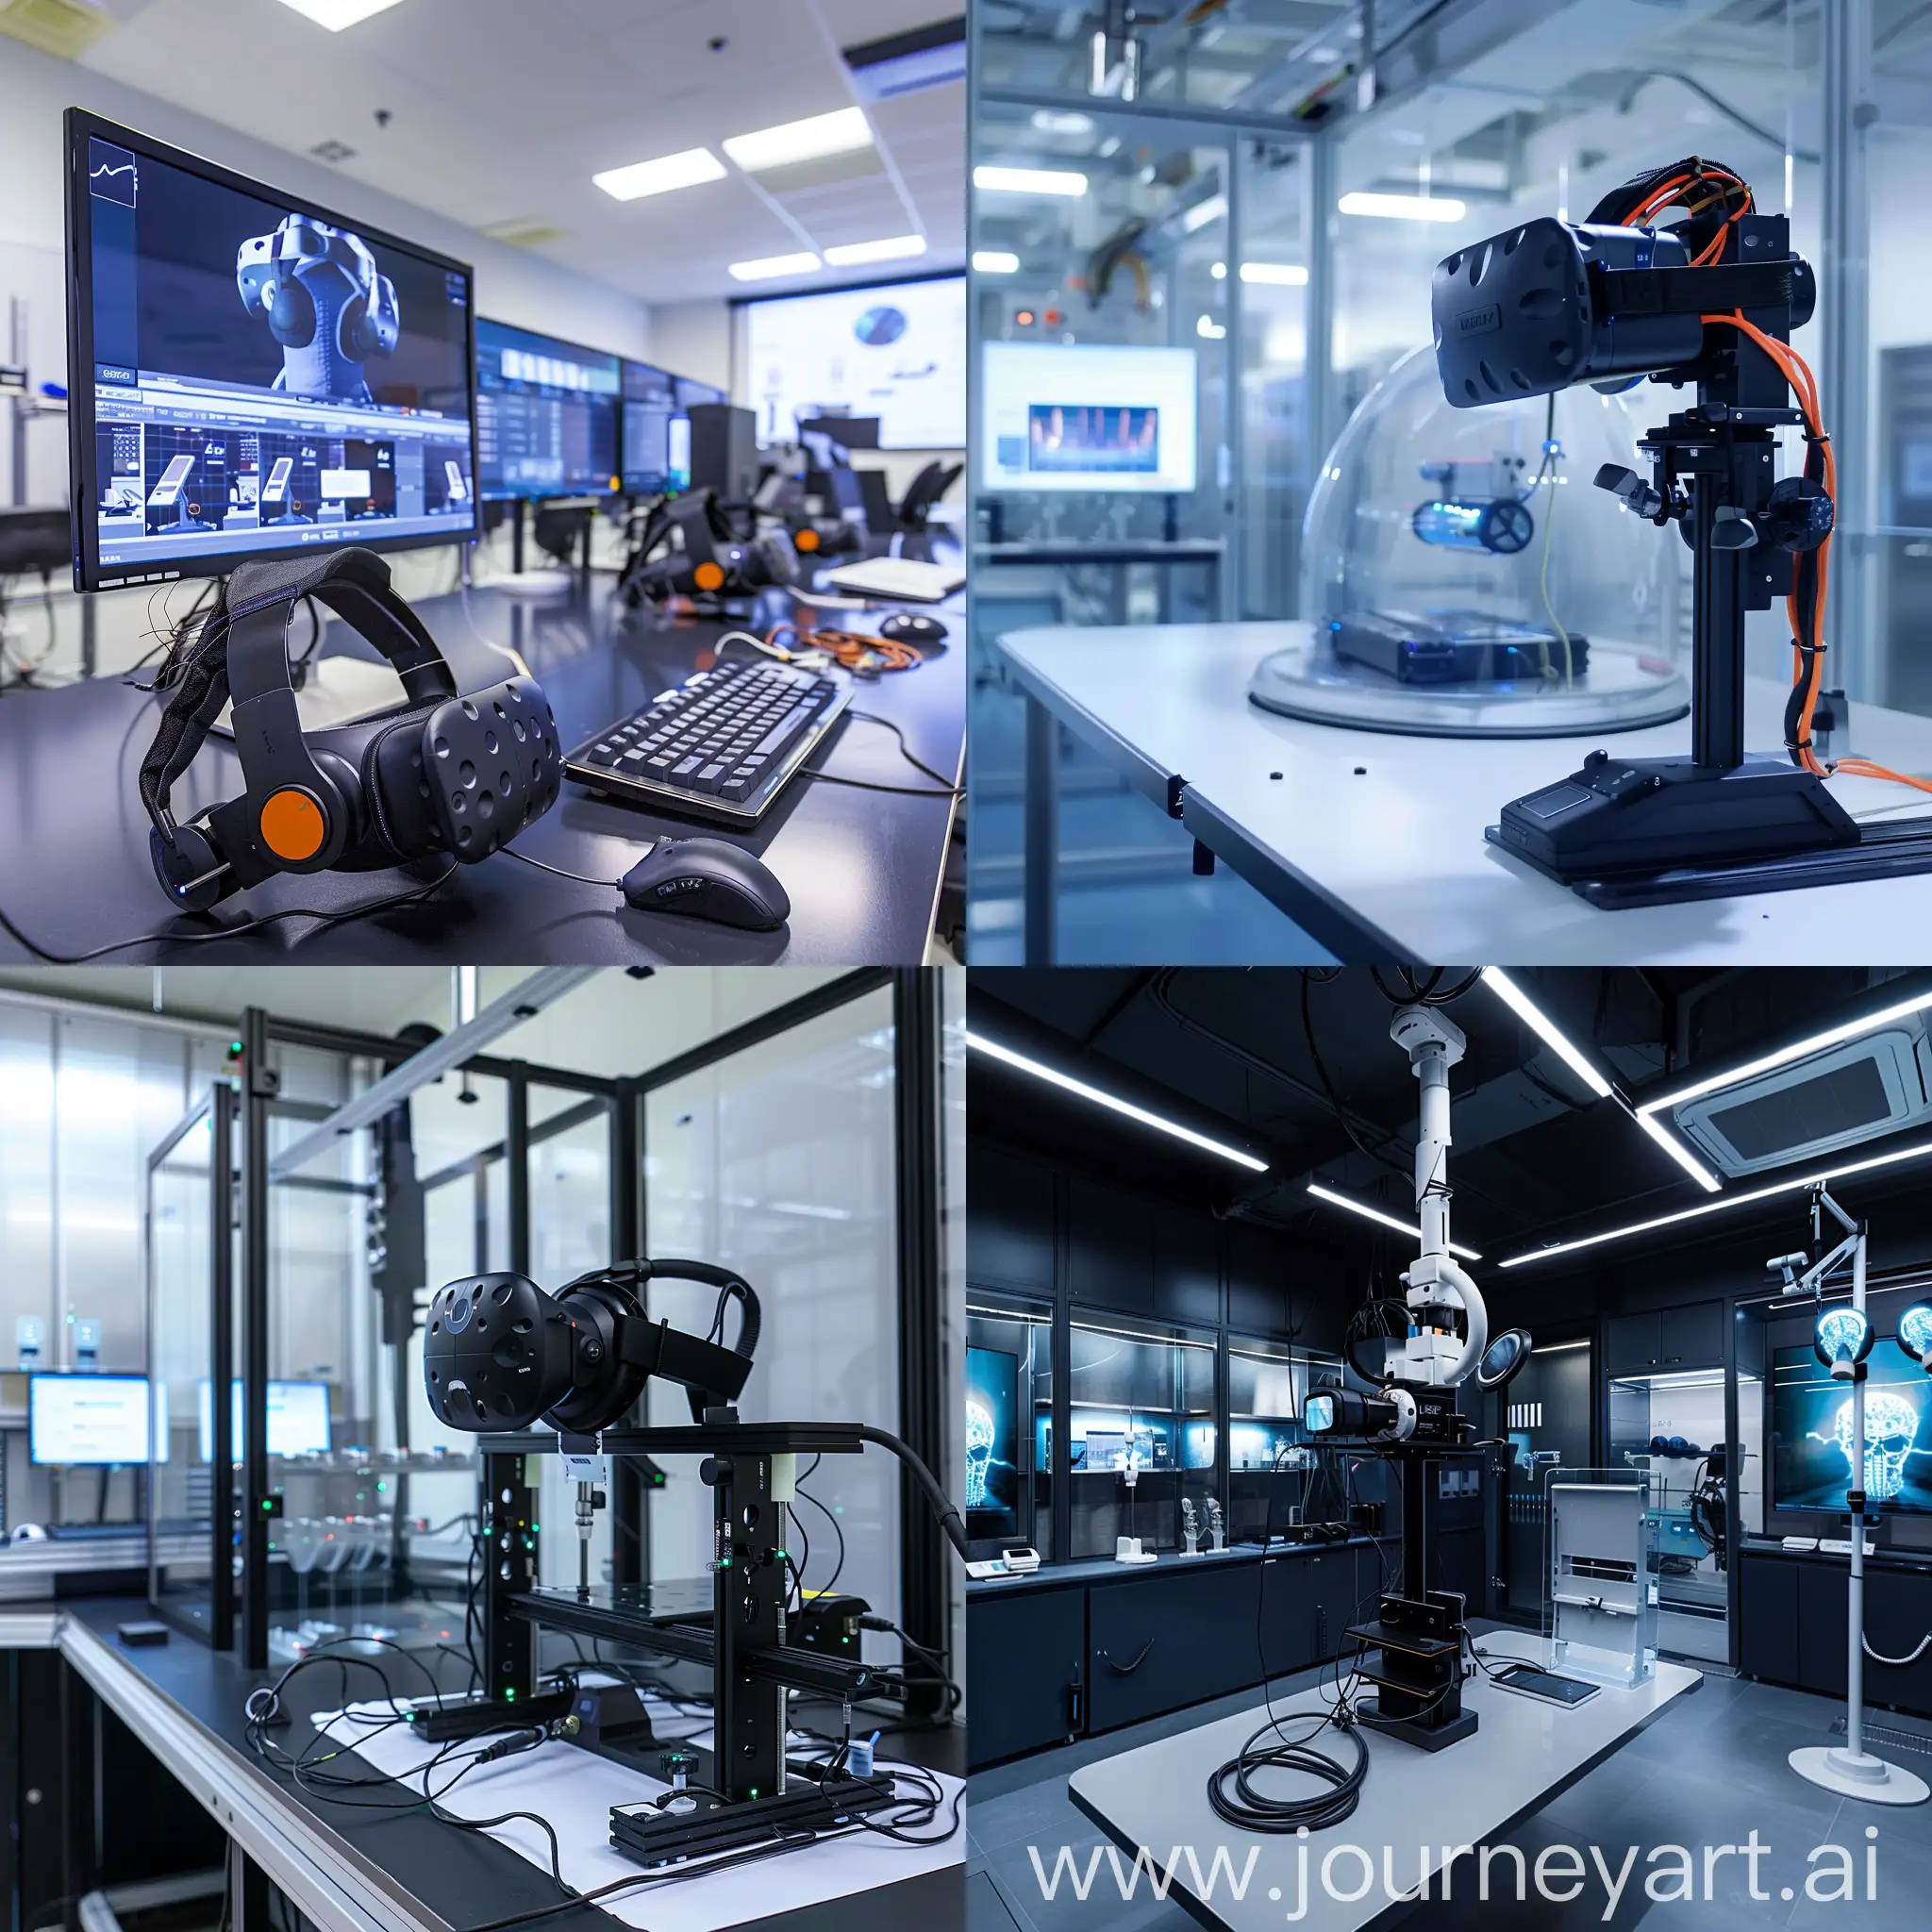 CuttingEdge-VR-Laboratory-with-Advanced-Equipment